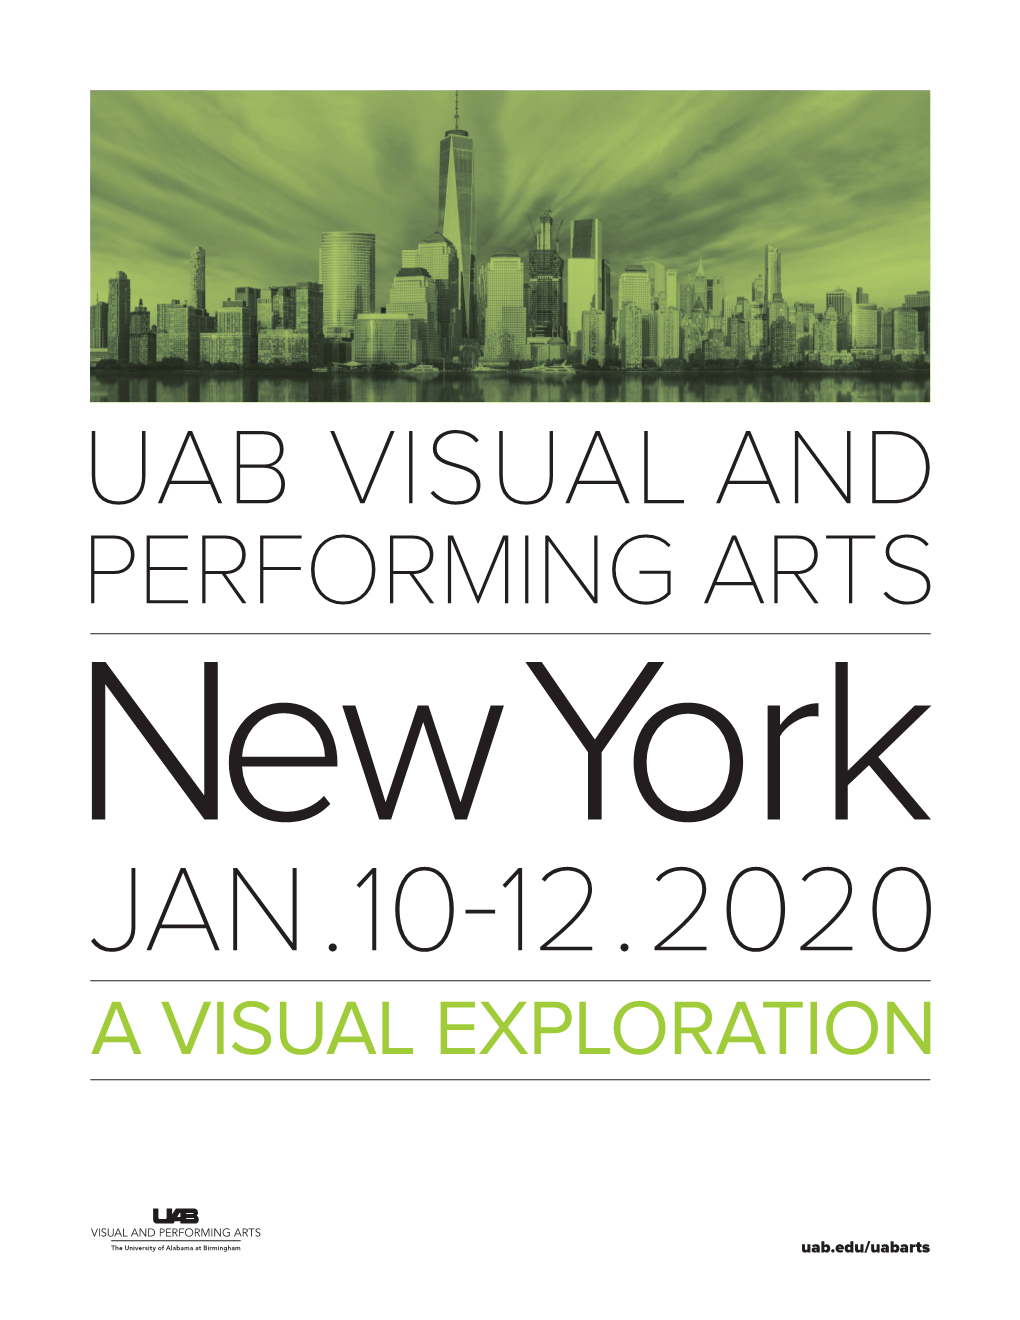 UAB VISUAL and PERFORMING ARTS New York JAN